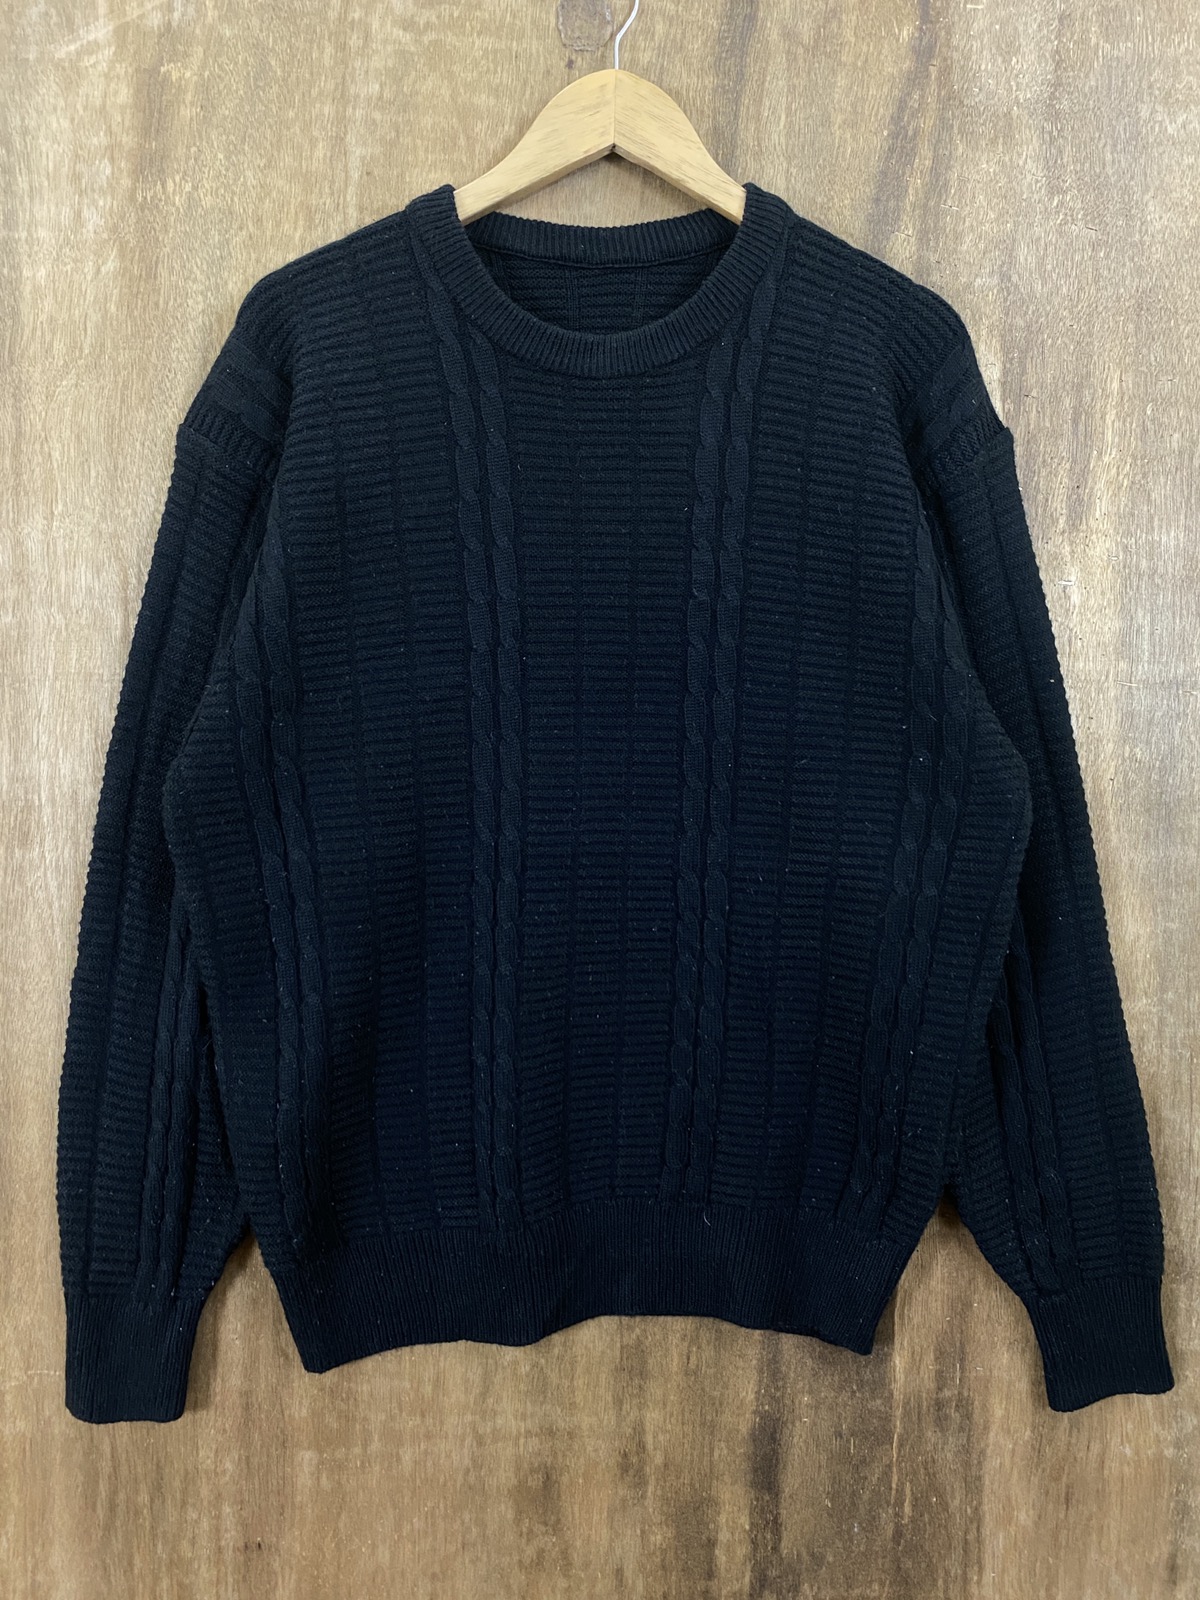 Japanese Brand - Japanese Brand Black Knit Sweaters #1587 - 1